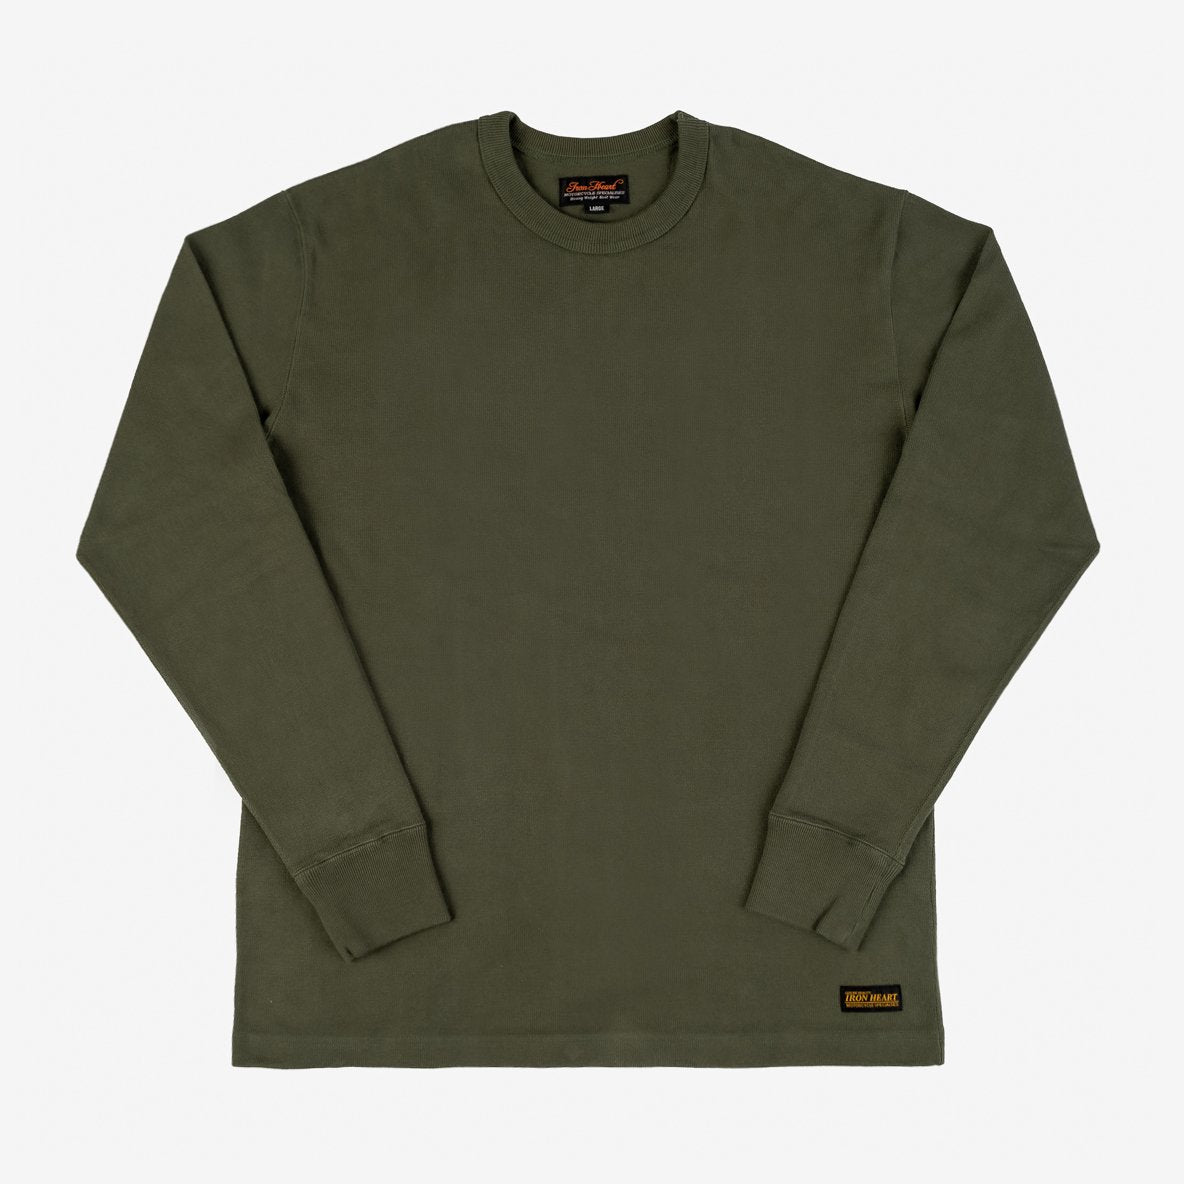 IHTL-1501-OLV 11oz Cotton Knit Crewneck Sweater Olive